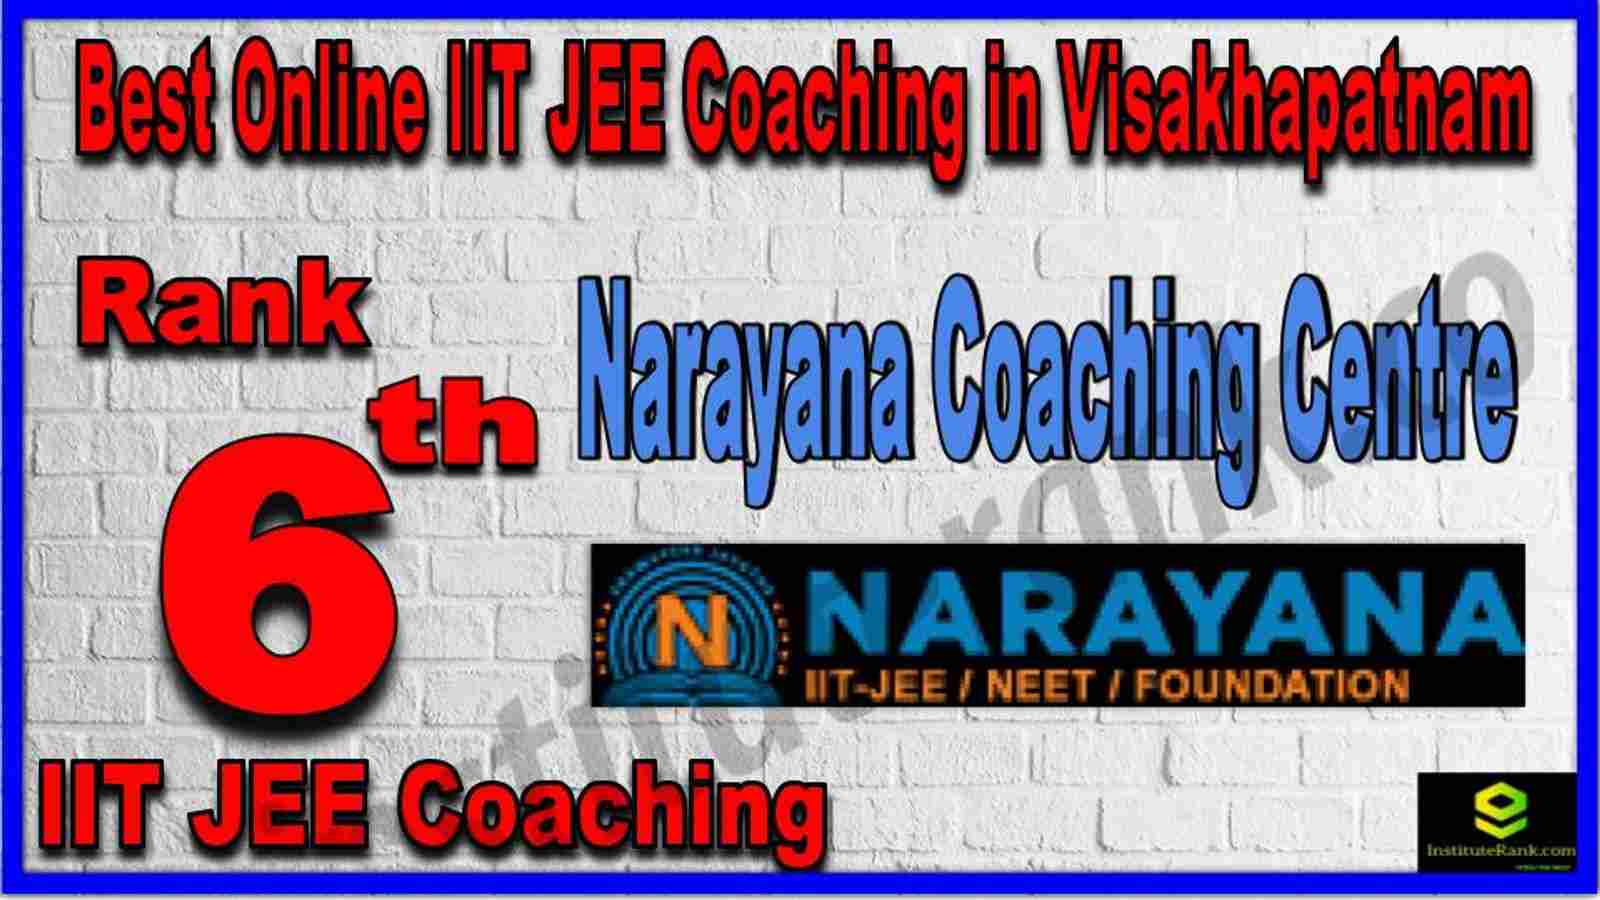 Rank 6th Best Online IIT JEE Coaching in Visakhapatnam